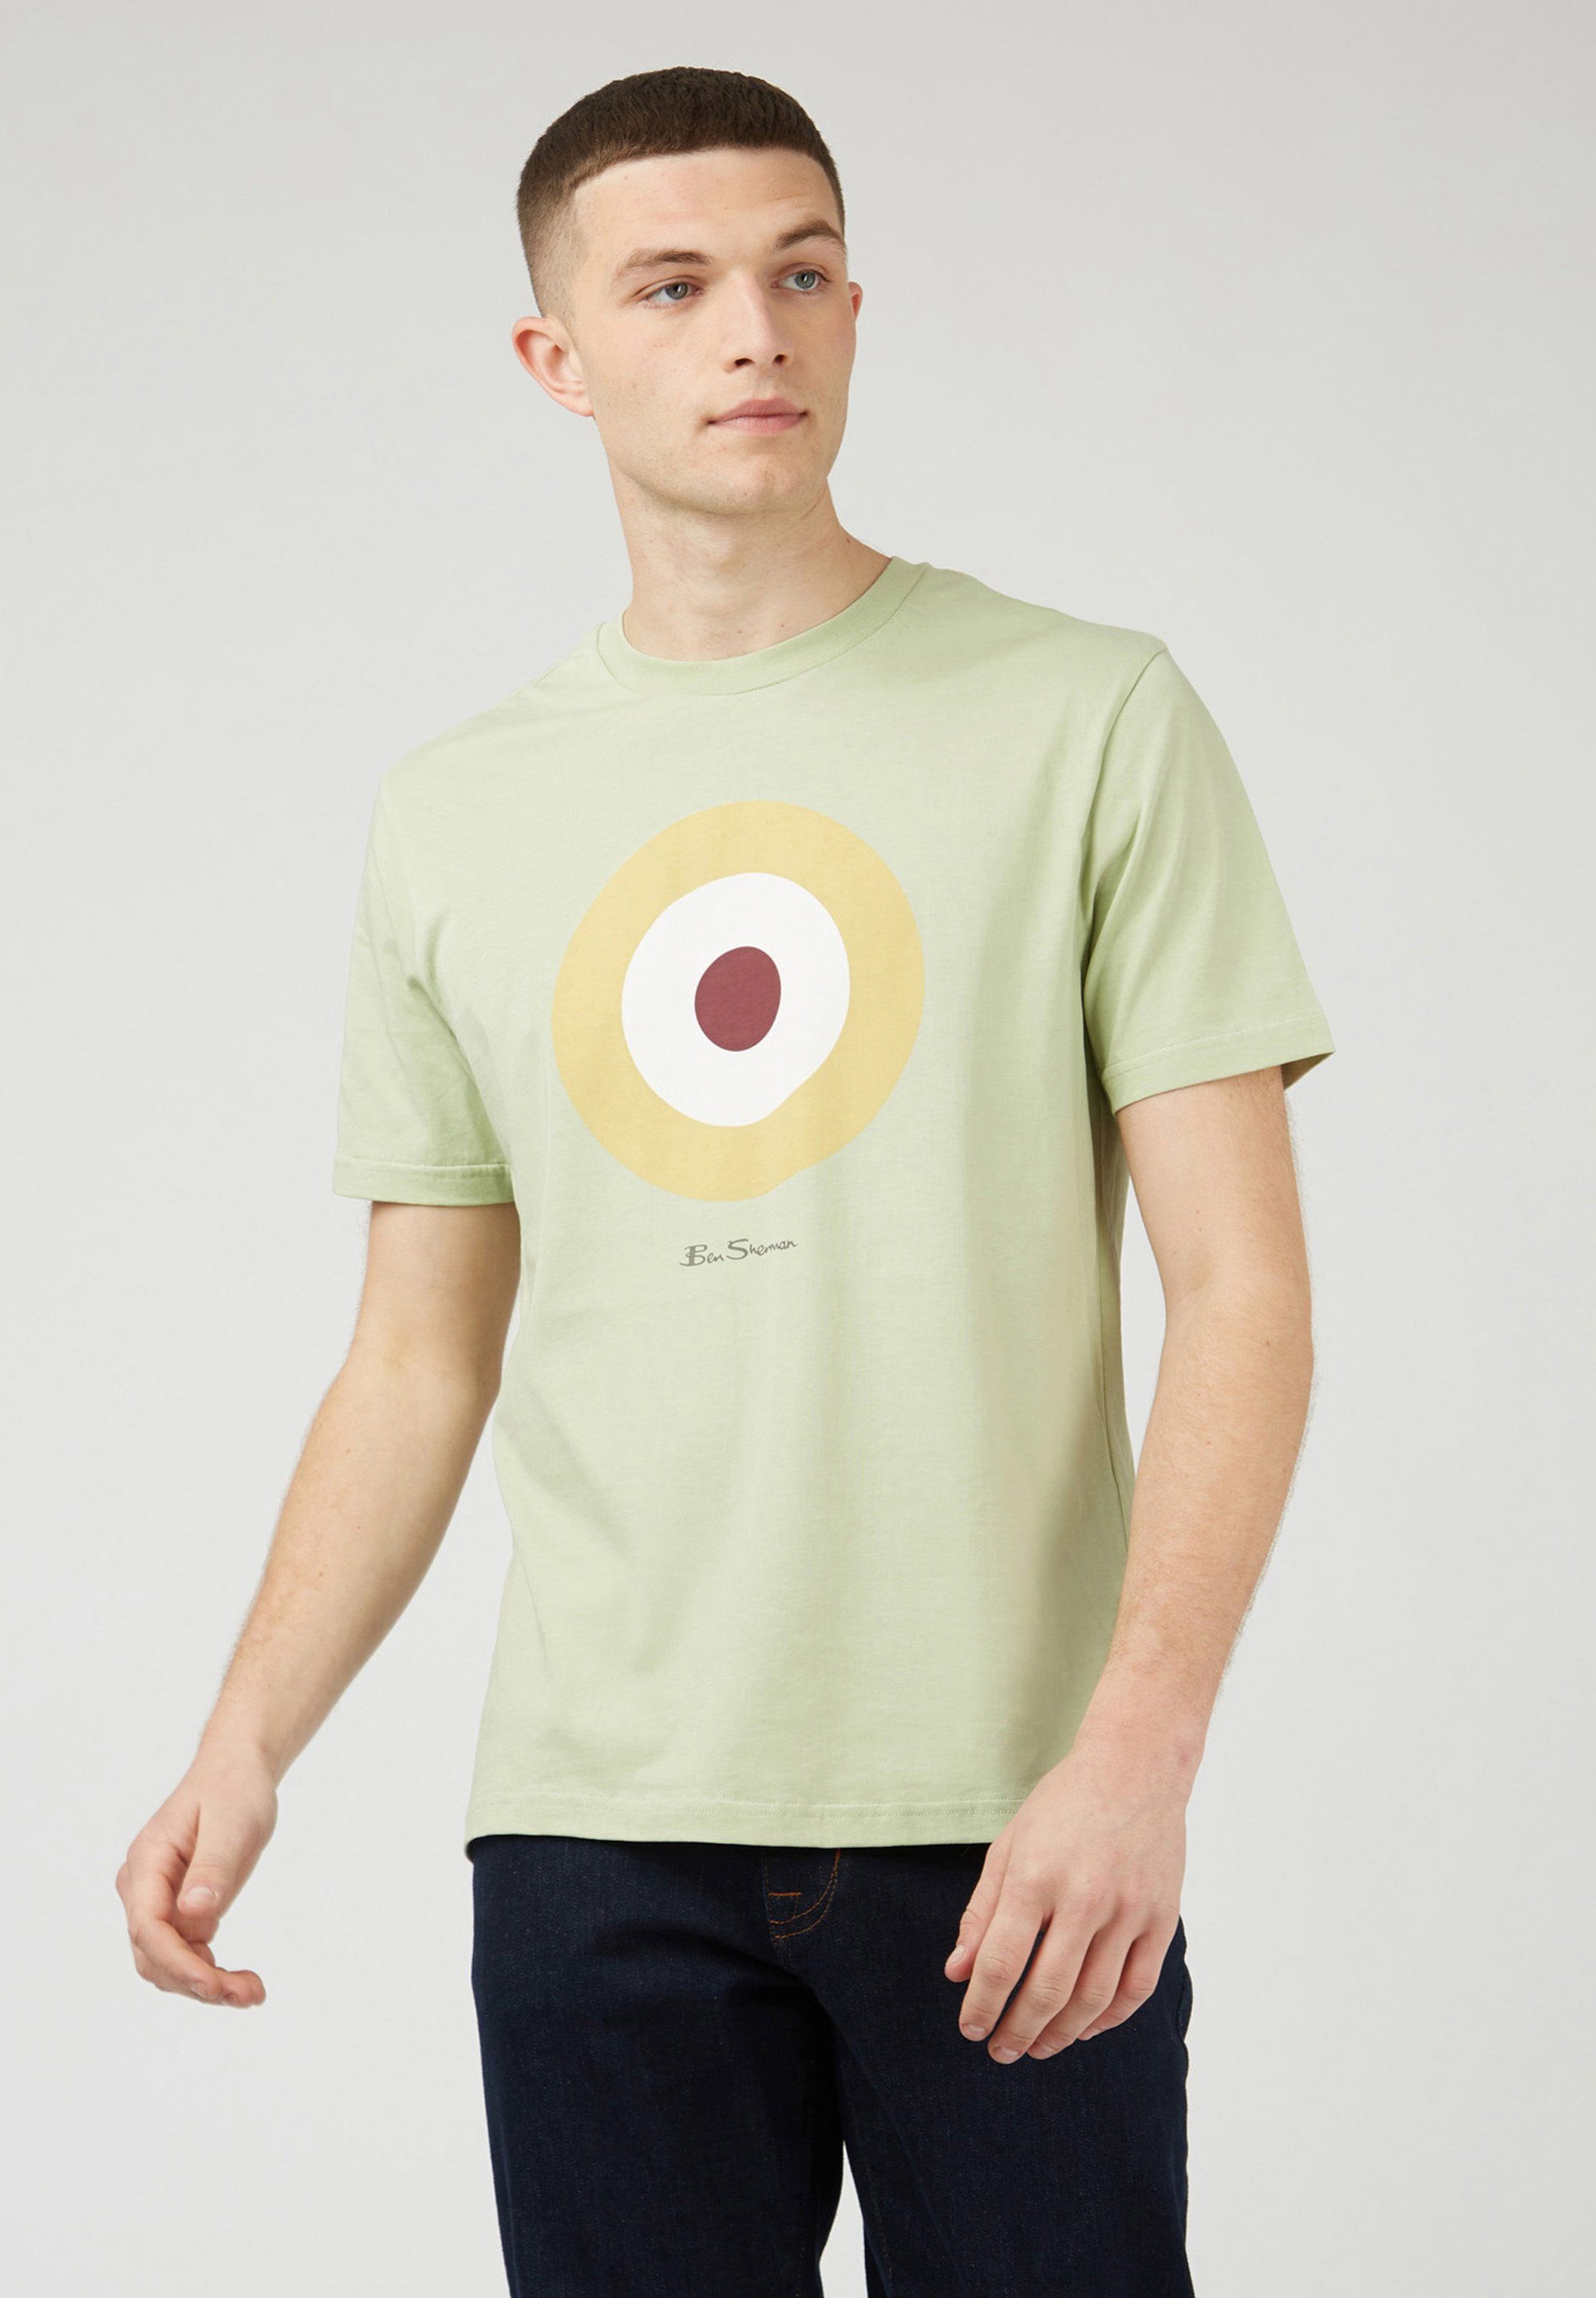 Versandhandelsseite Ben Sherman T-Shirt Signature T-Shirt pistachio bedrucktes Target Tee Grafisch